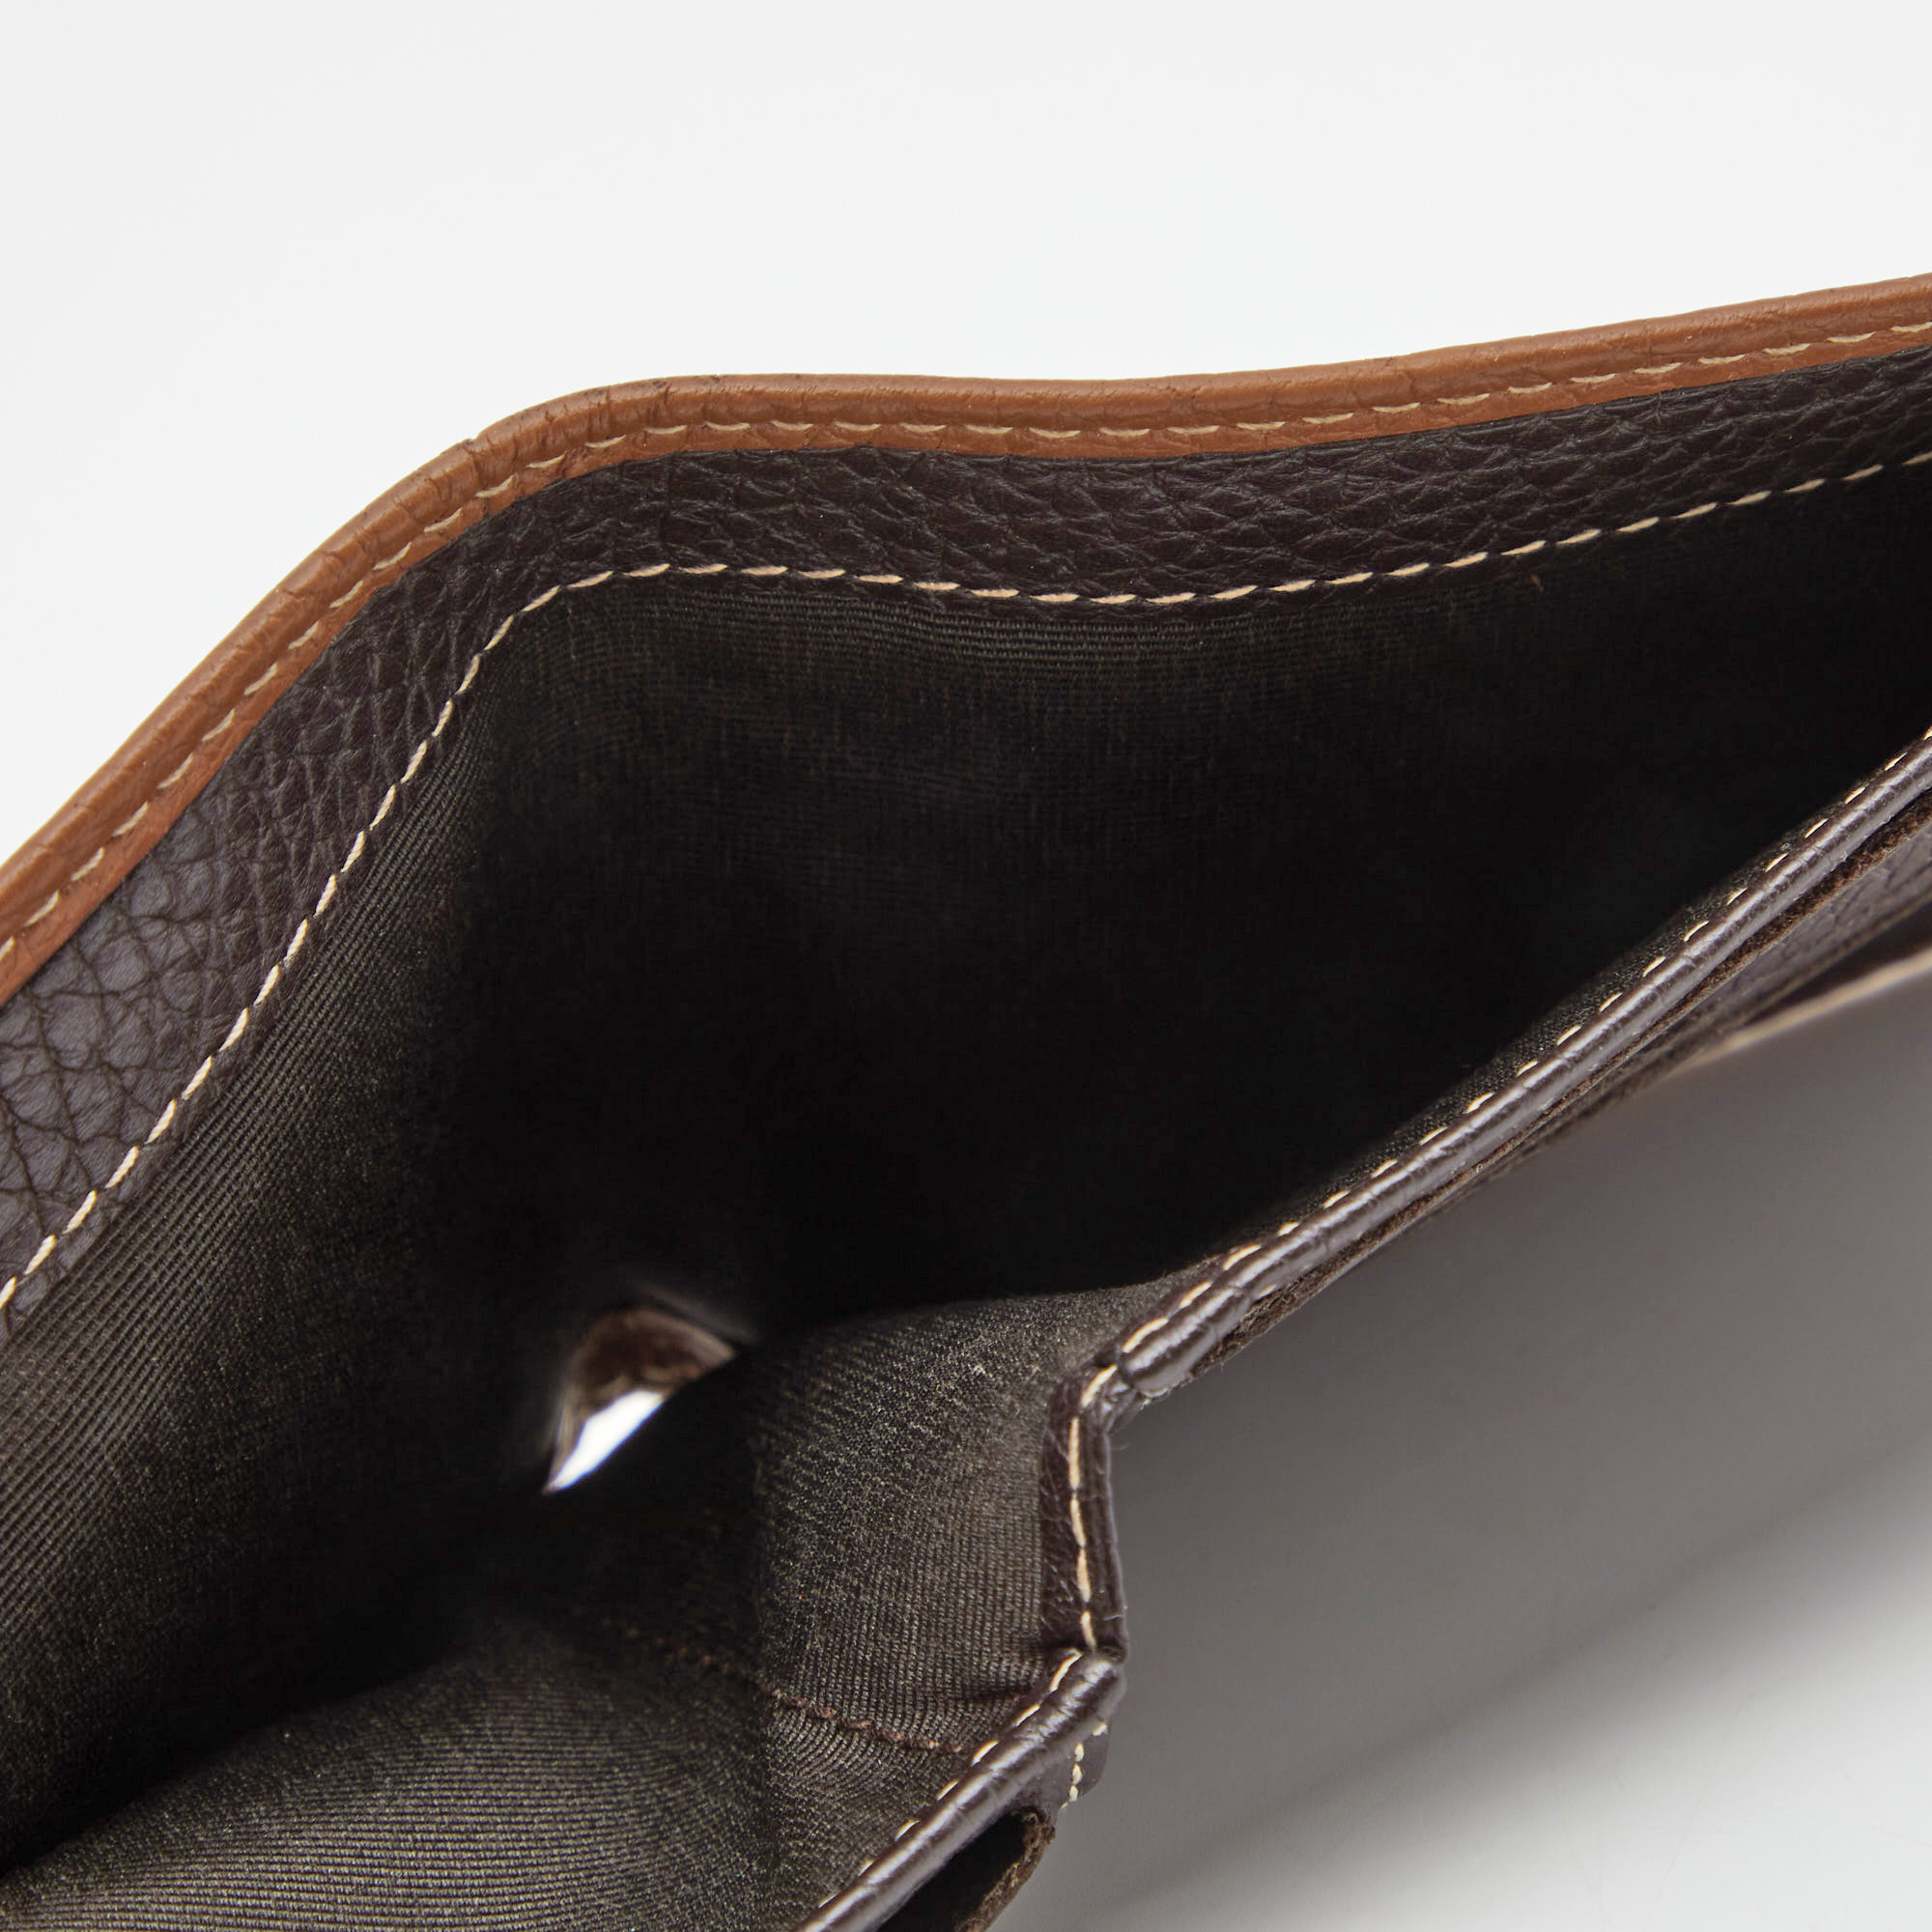 CH Carolina Herrera Brown Monogram Embossed Leather Bifold Wallet